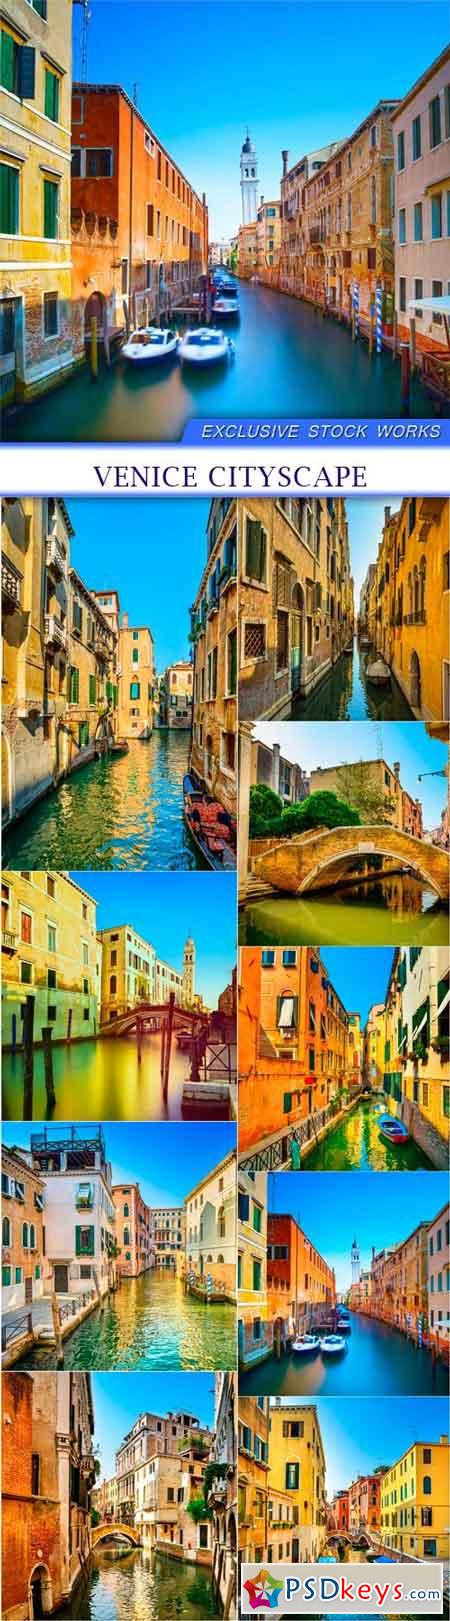 Venice cityscape 9X JPEG